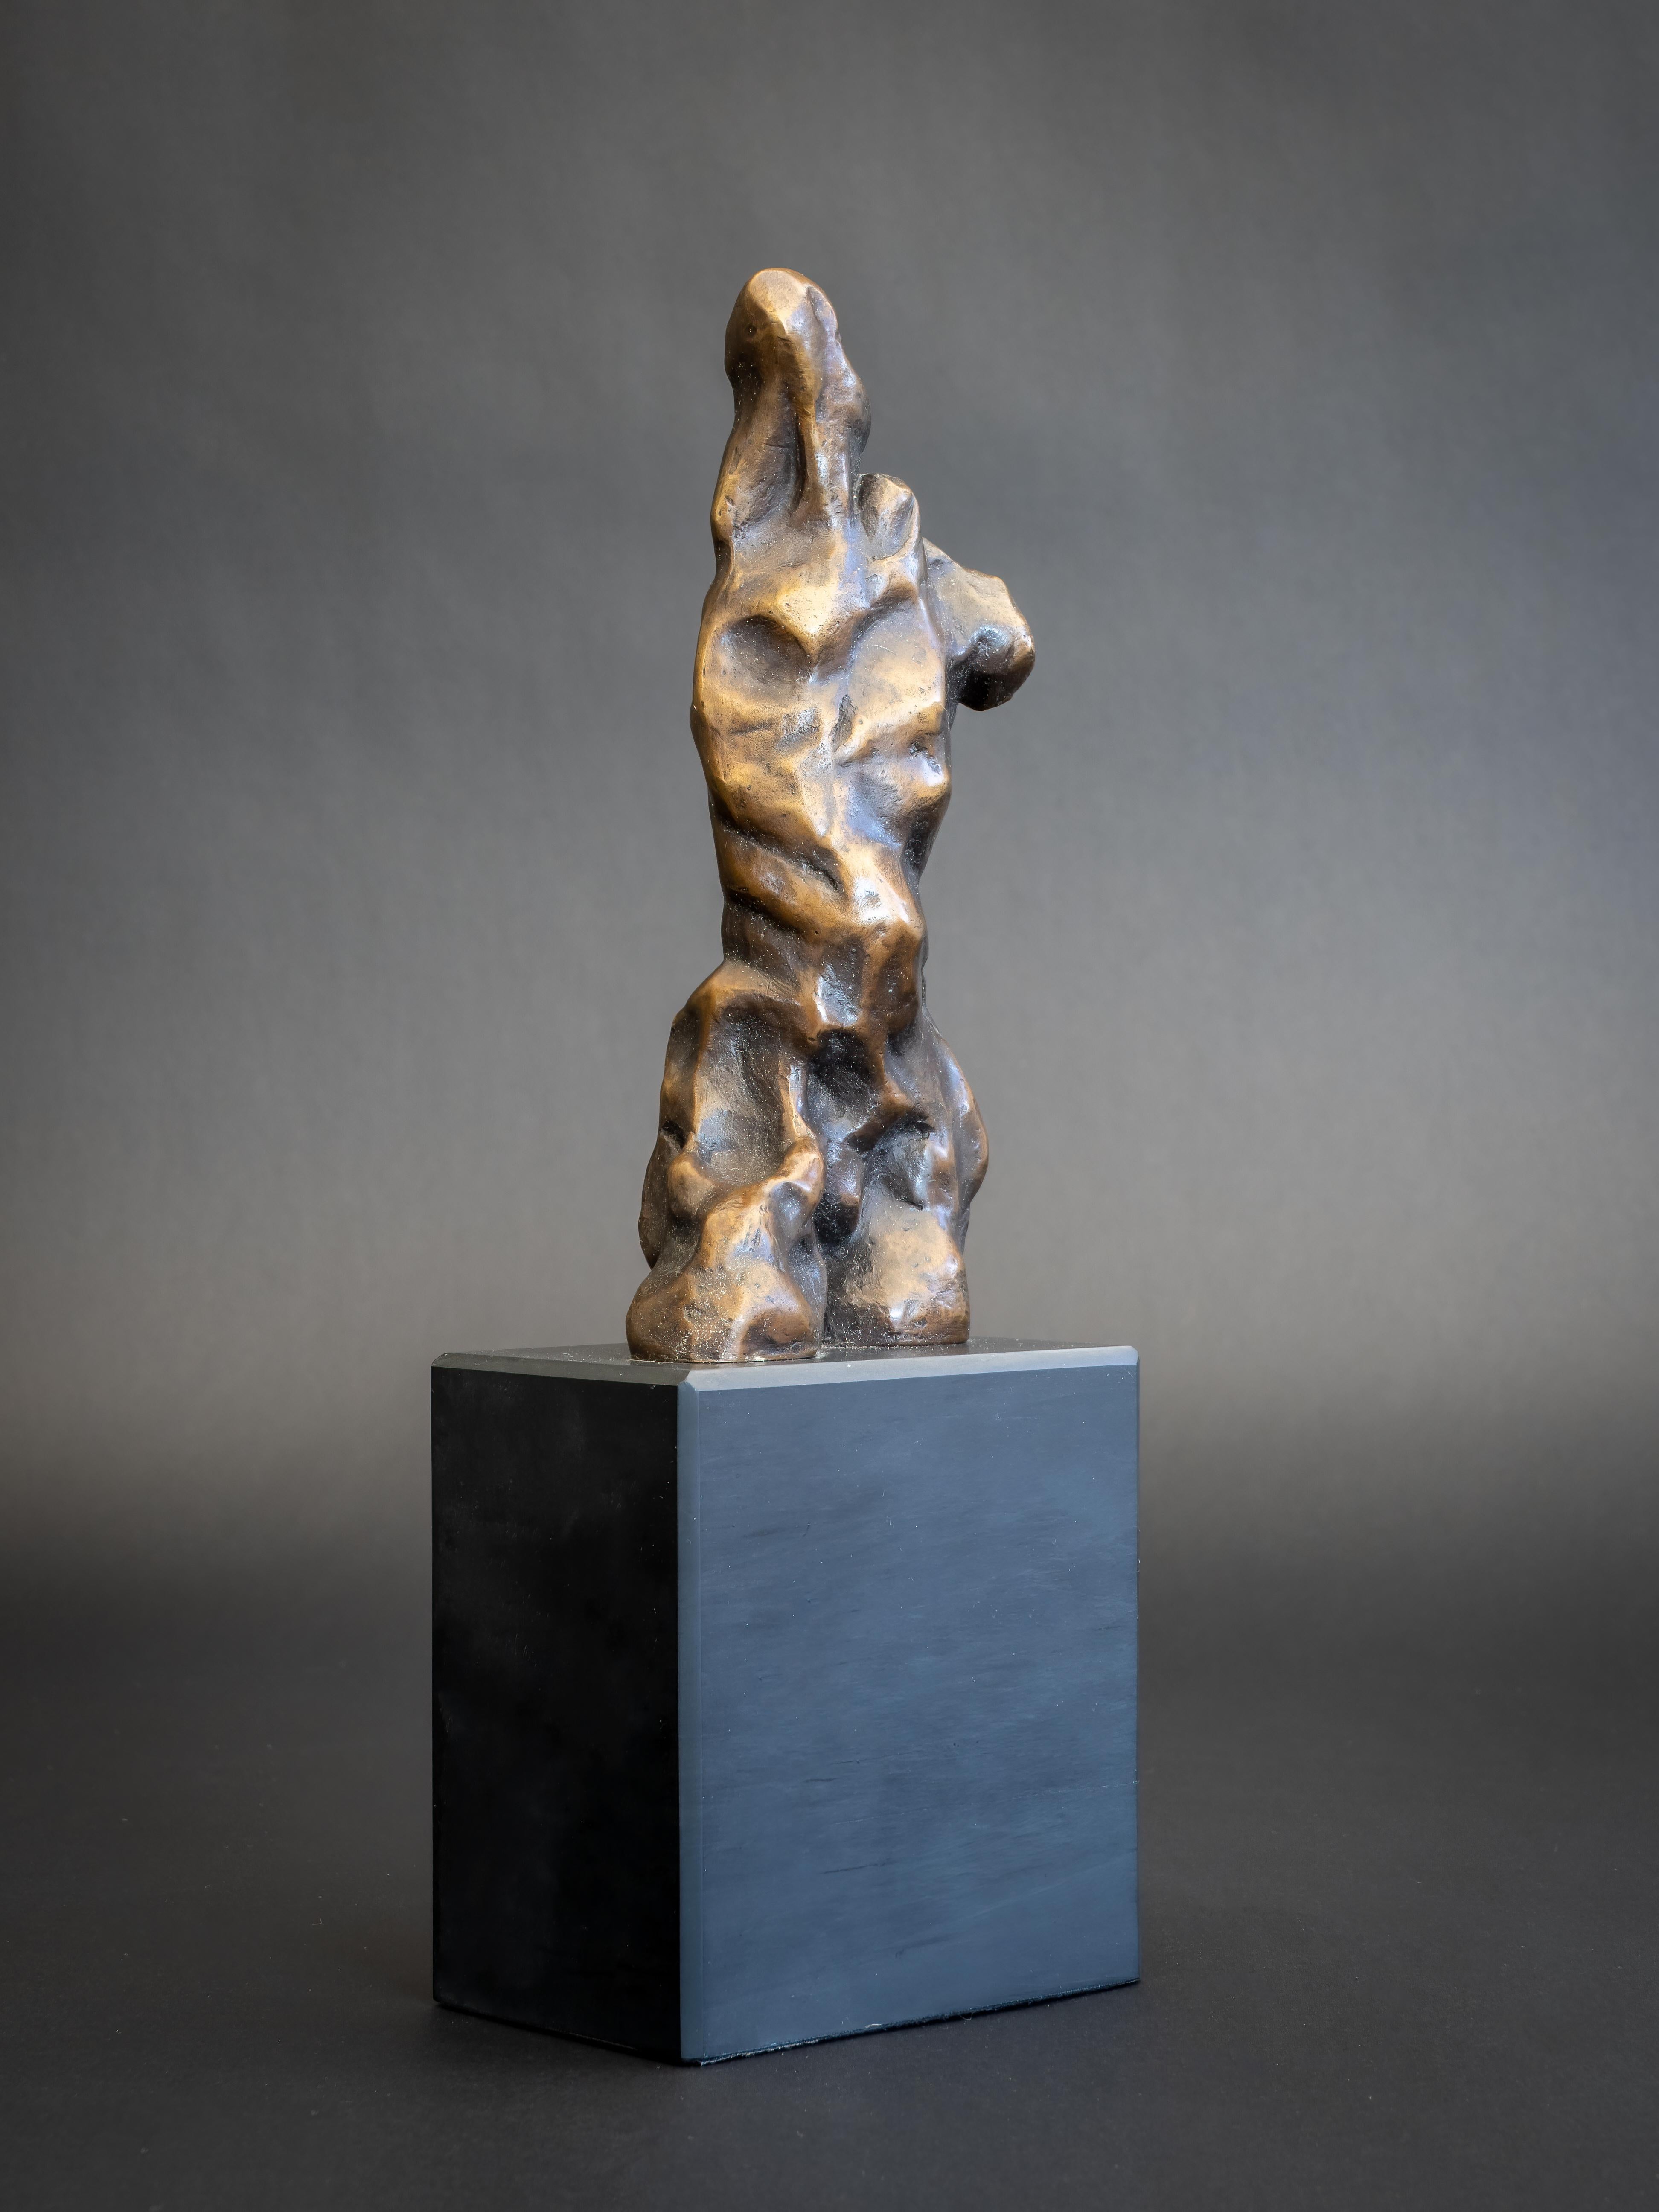 Adam II-original figurative bronze sculptures-artworks for sale-contemporary Art